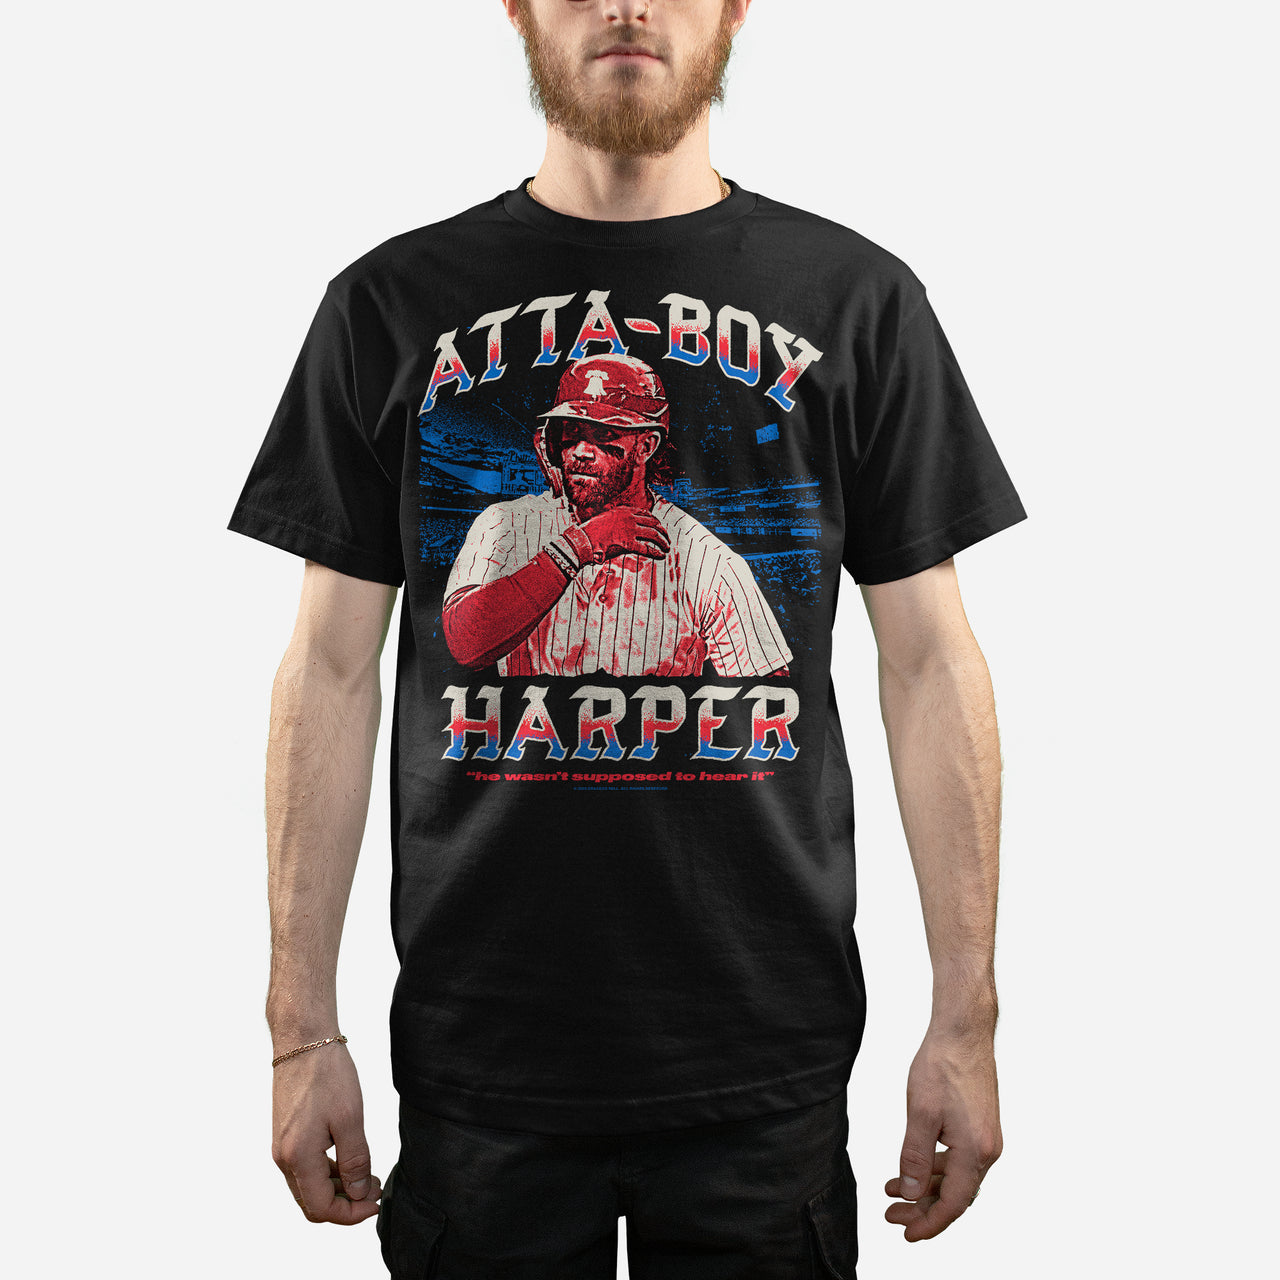 "Atta Boy" Shirt